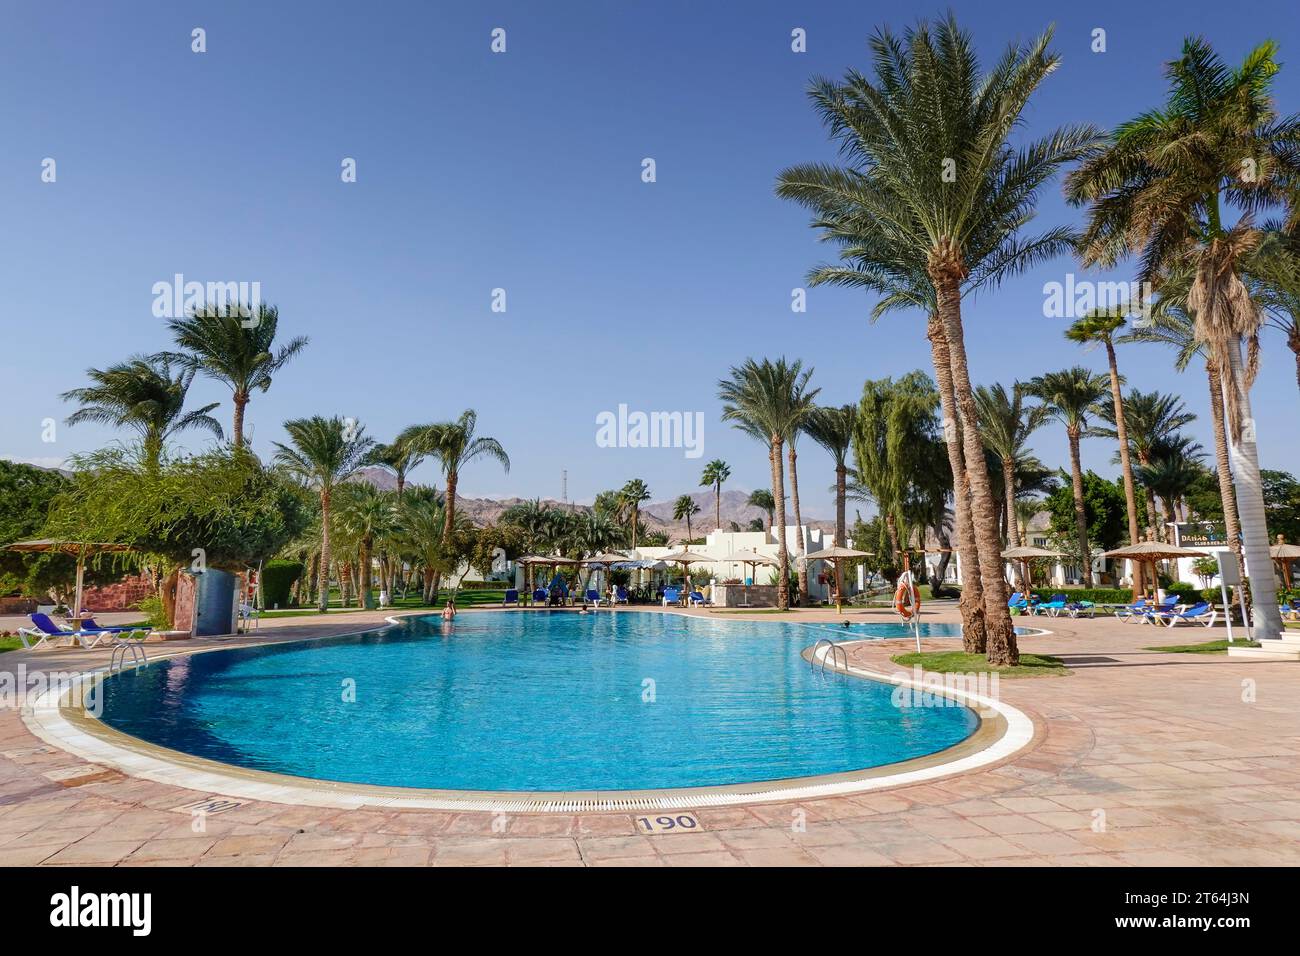 Hotelzimmer, Simmingpool, Palmen, Hotelanlage Tirana, South Dahab, Sinaï, Ägypten Banque D'Images